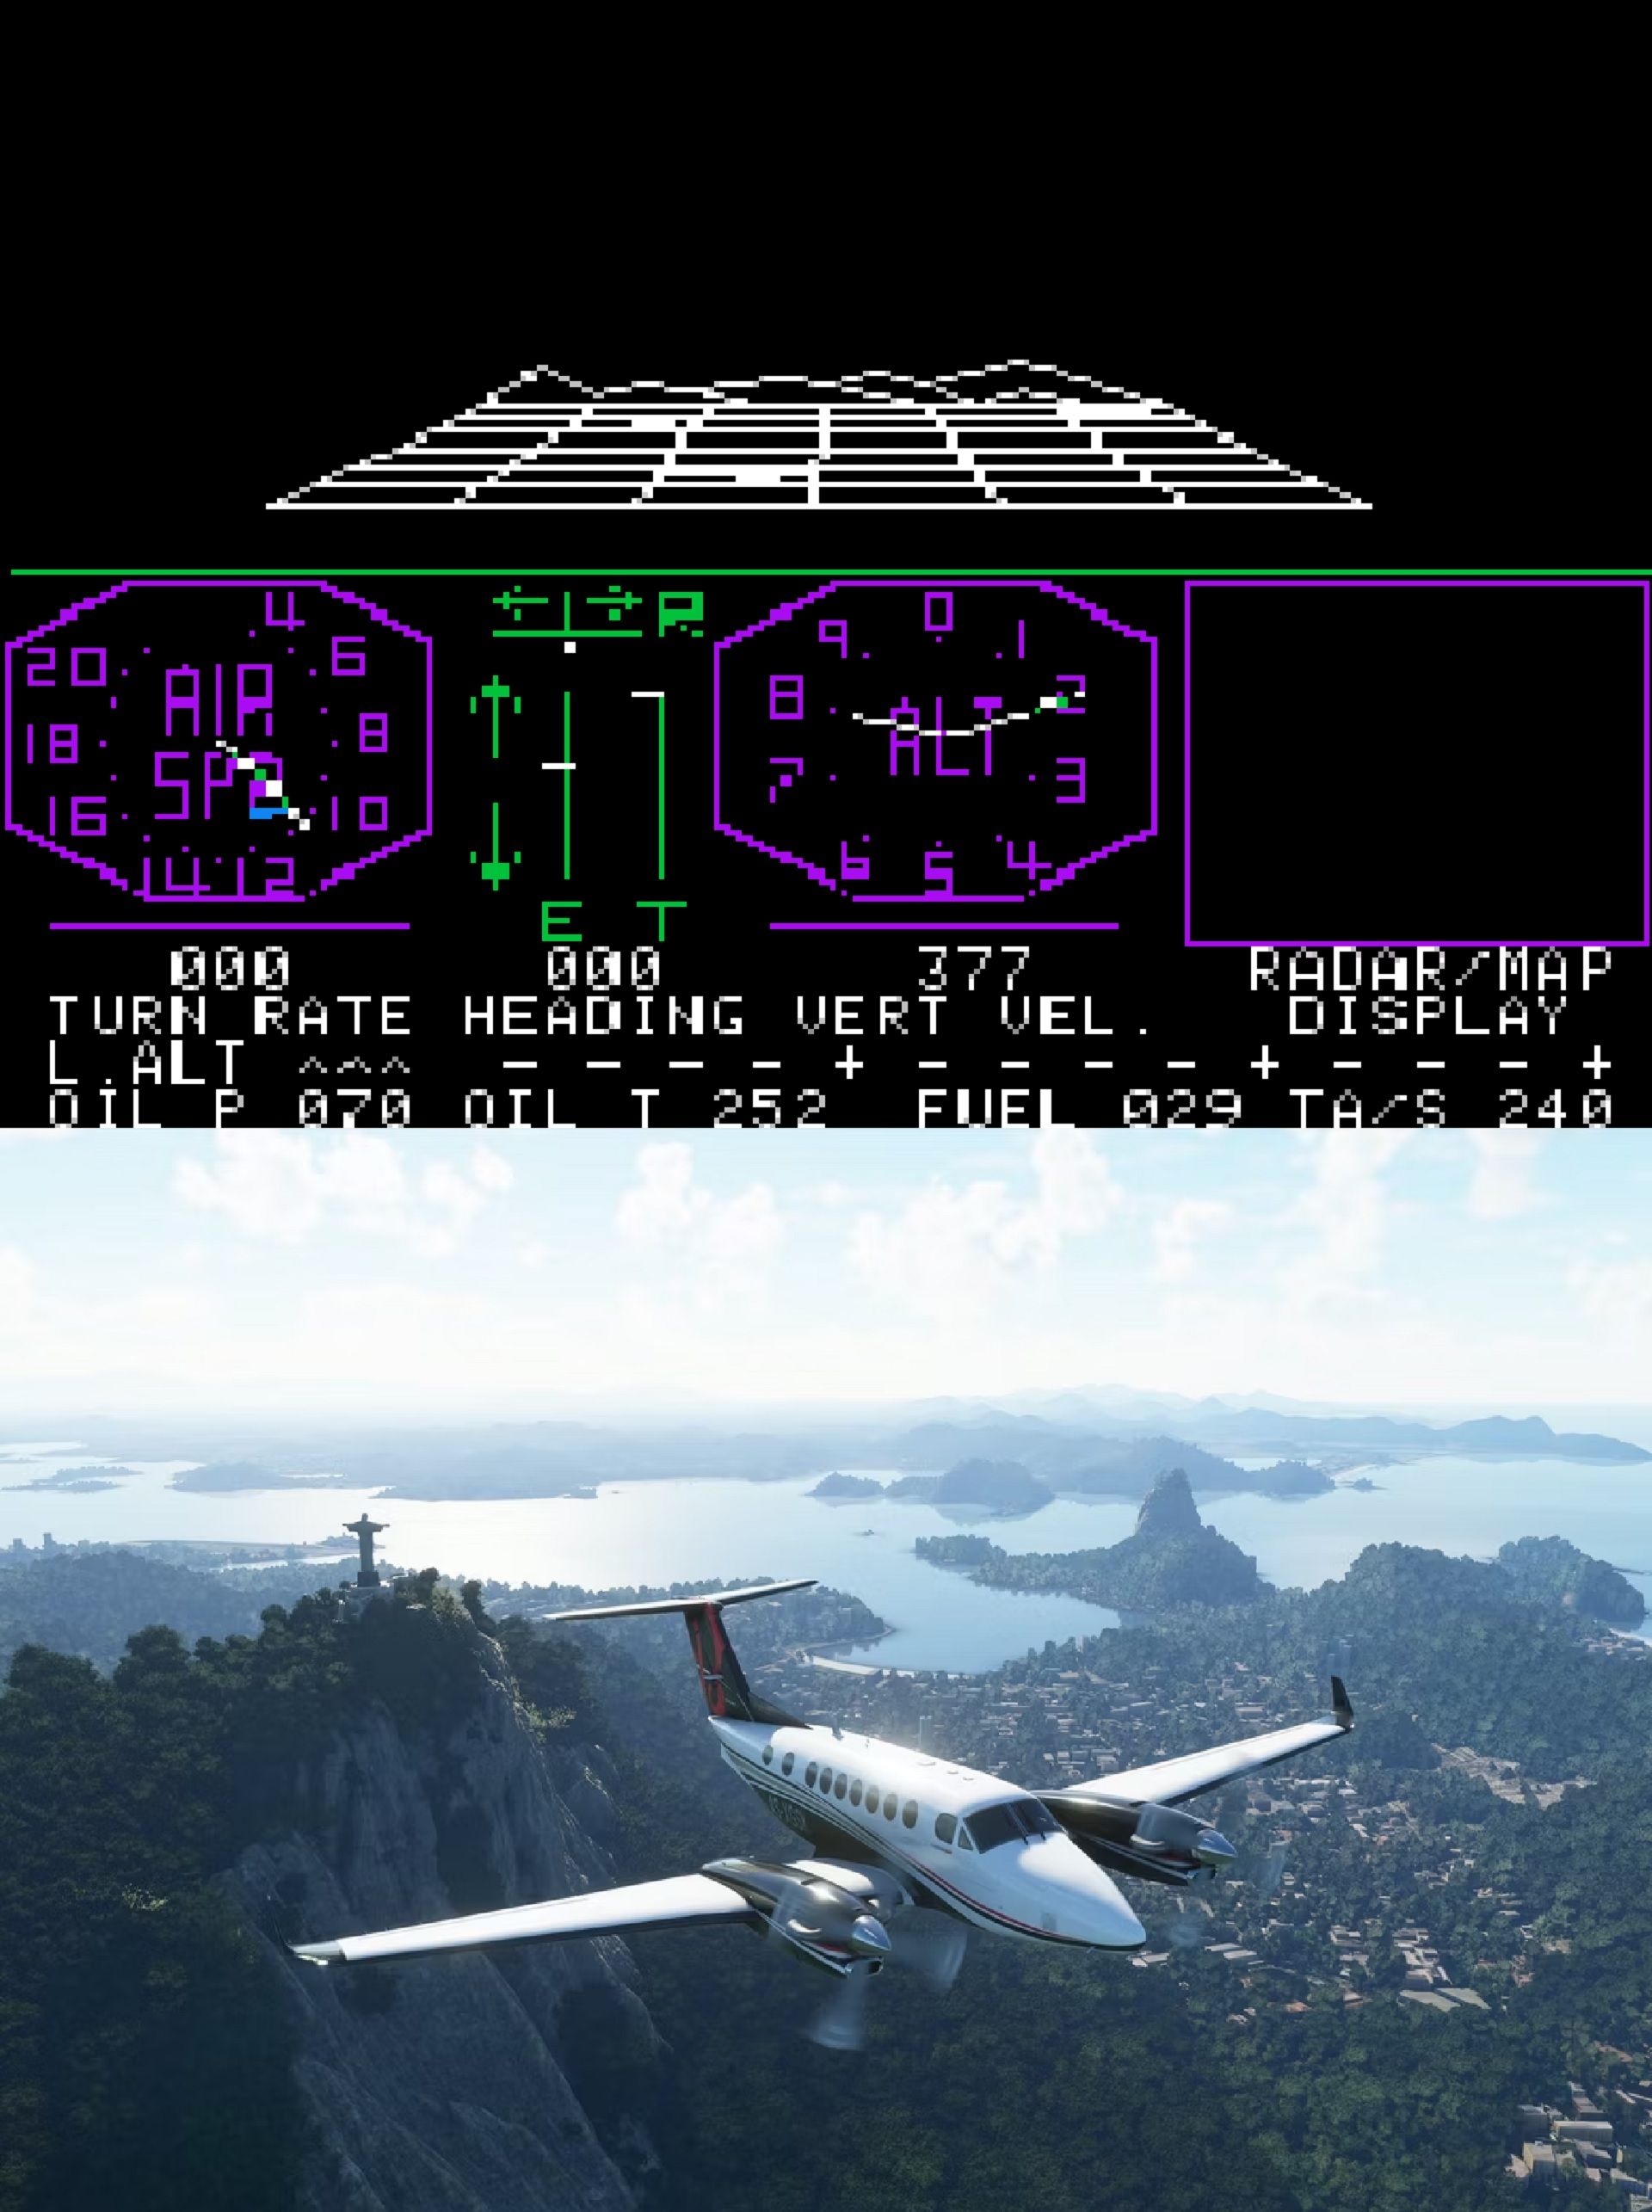 Microsoft Flight Sim